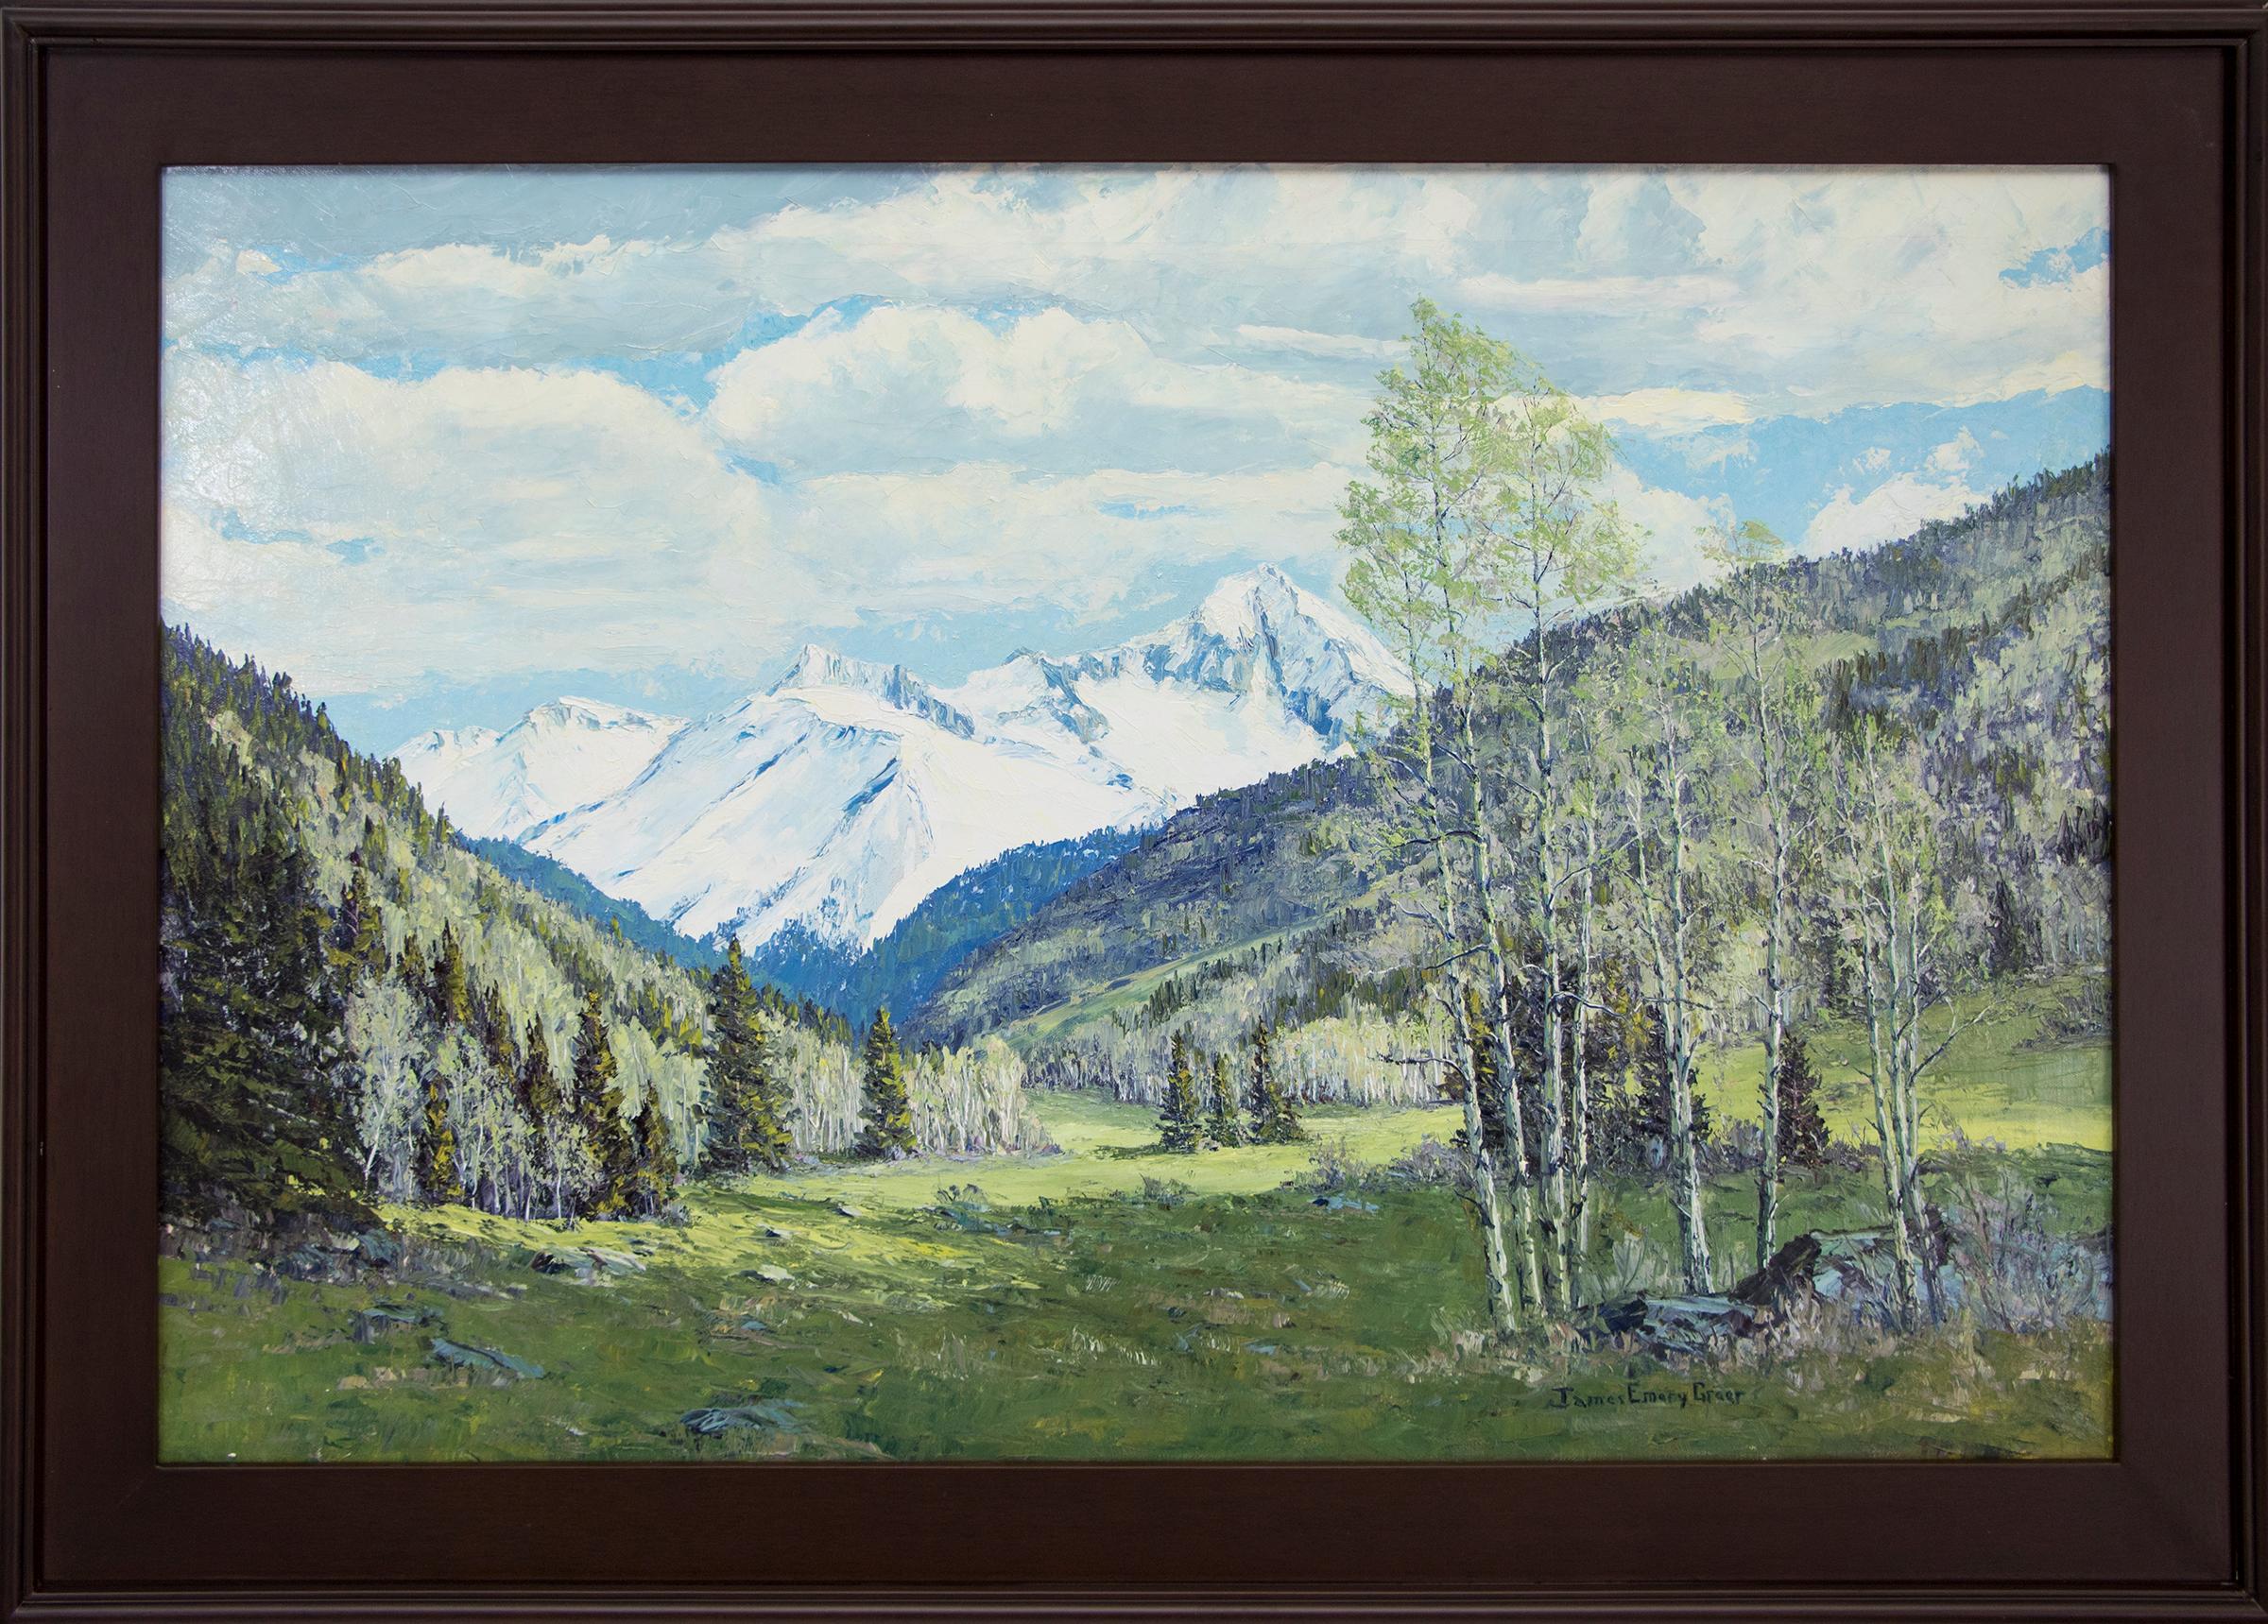 James Emery Greer Landscape Painting - Renewal - Grizzly Peak San Juans (Colorado Mountain Landscape in Spring)